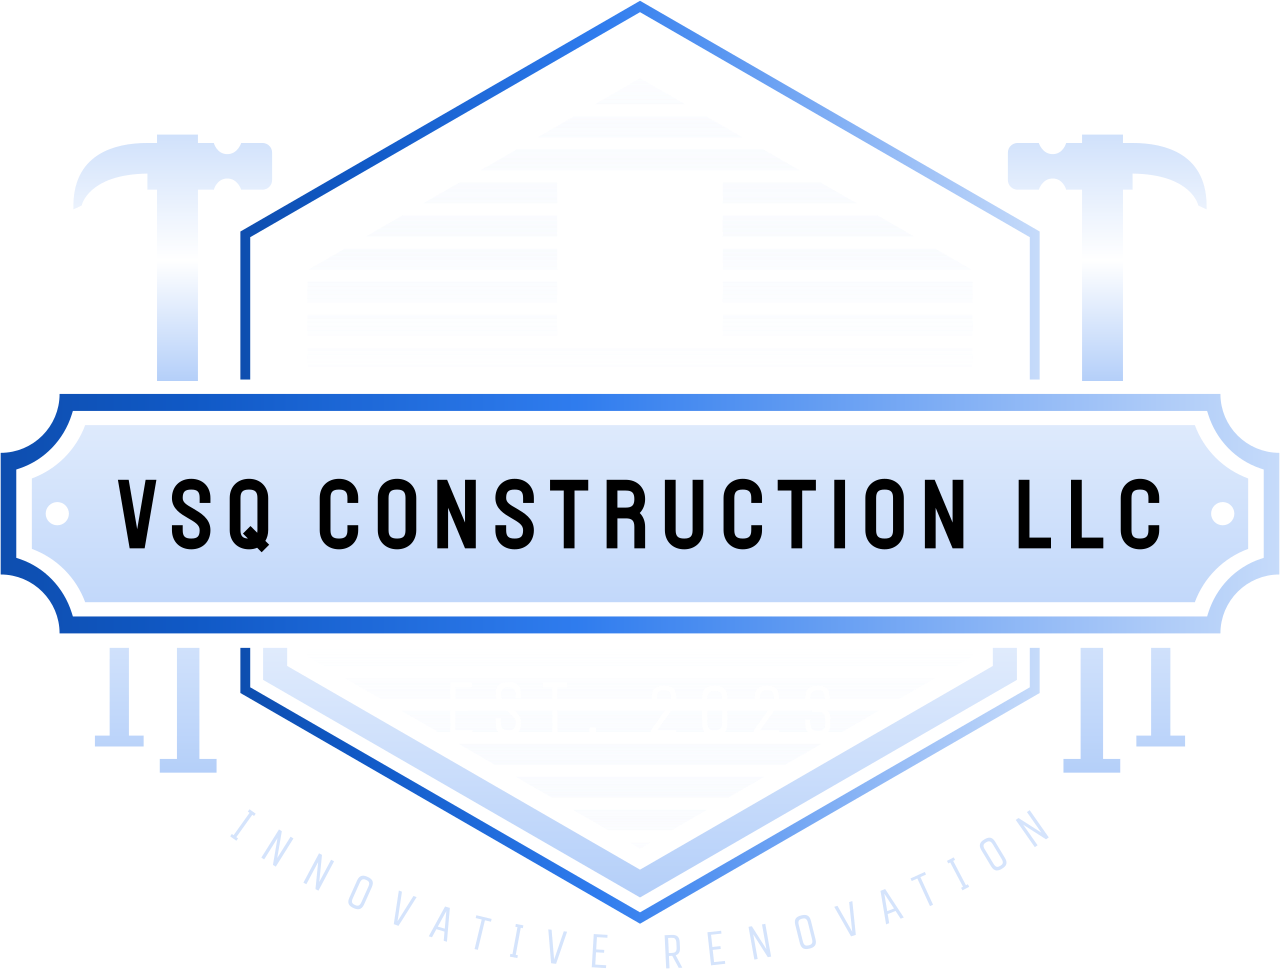 VSQ Construction LLC's logo